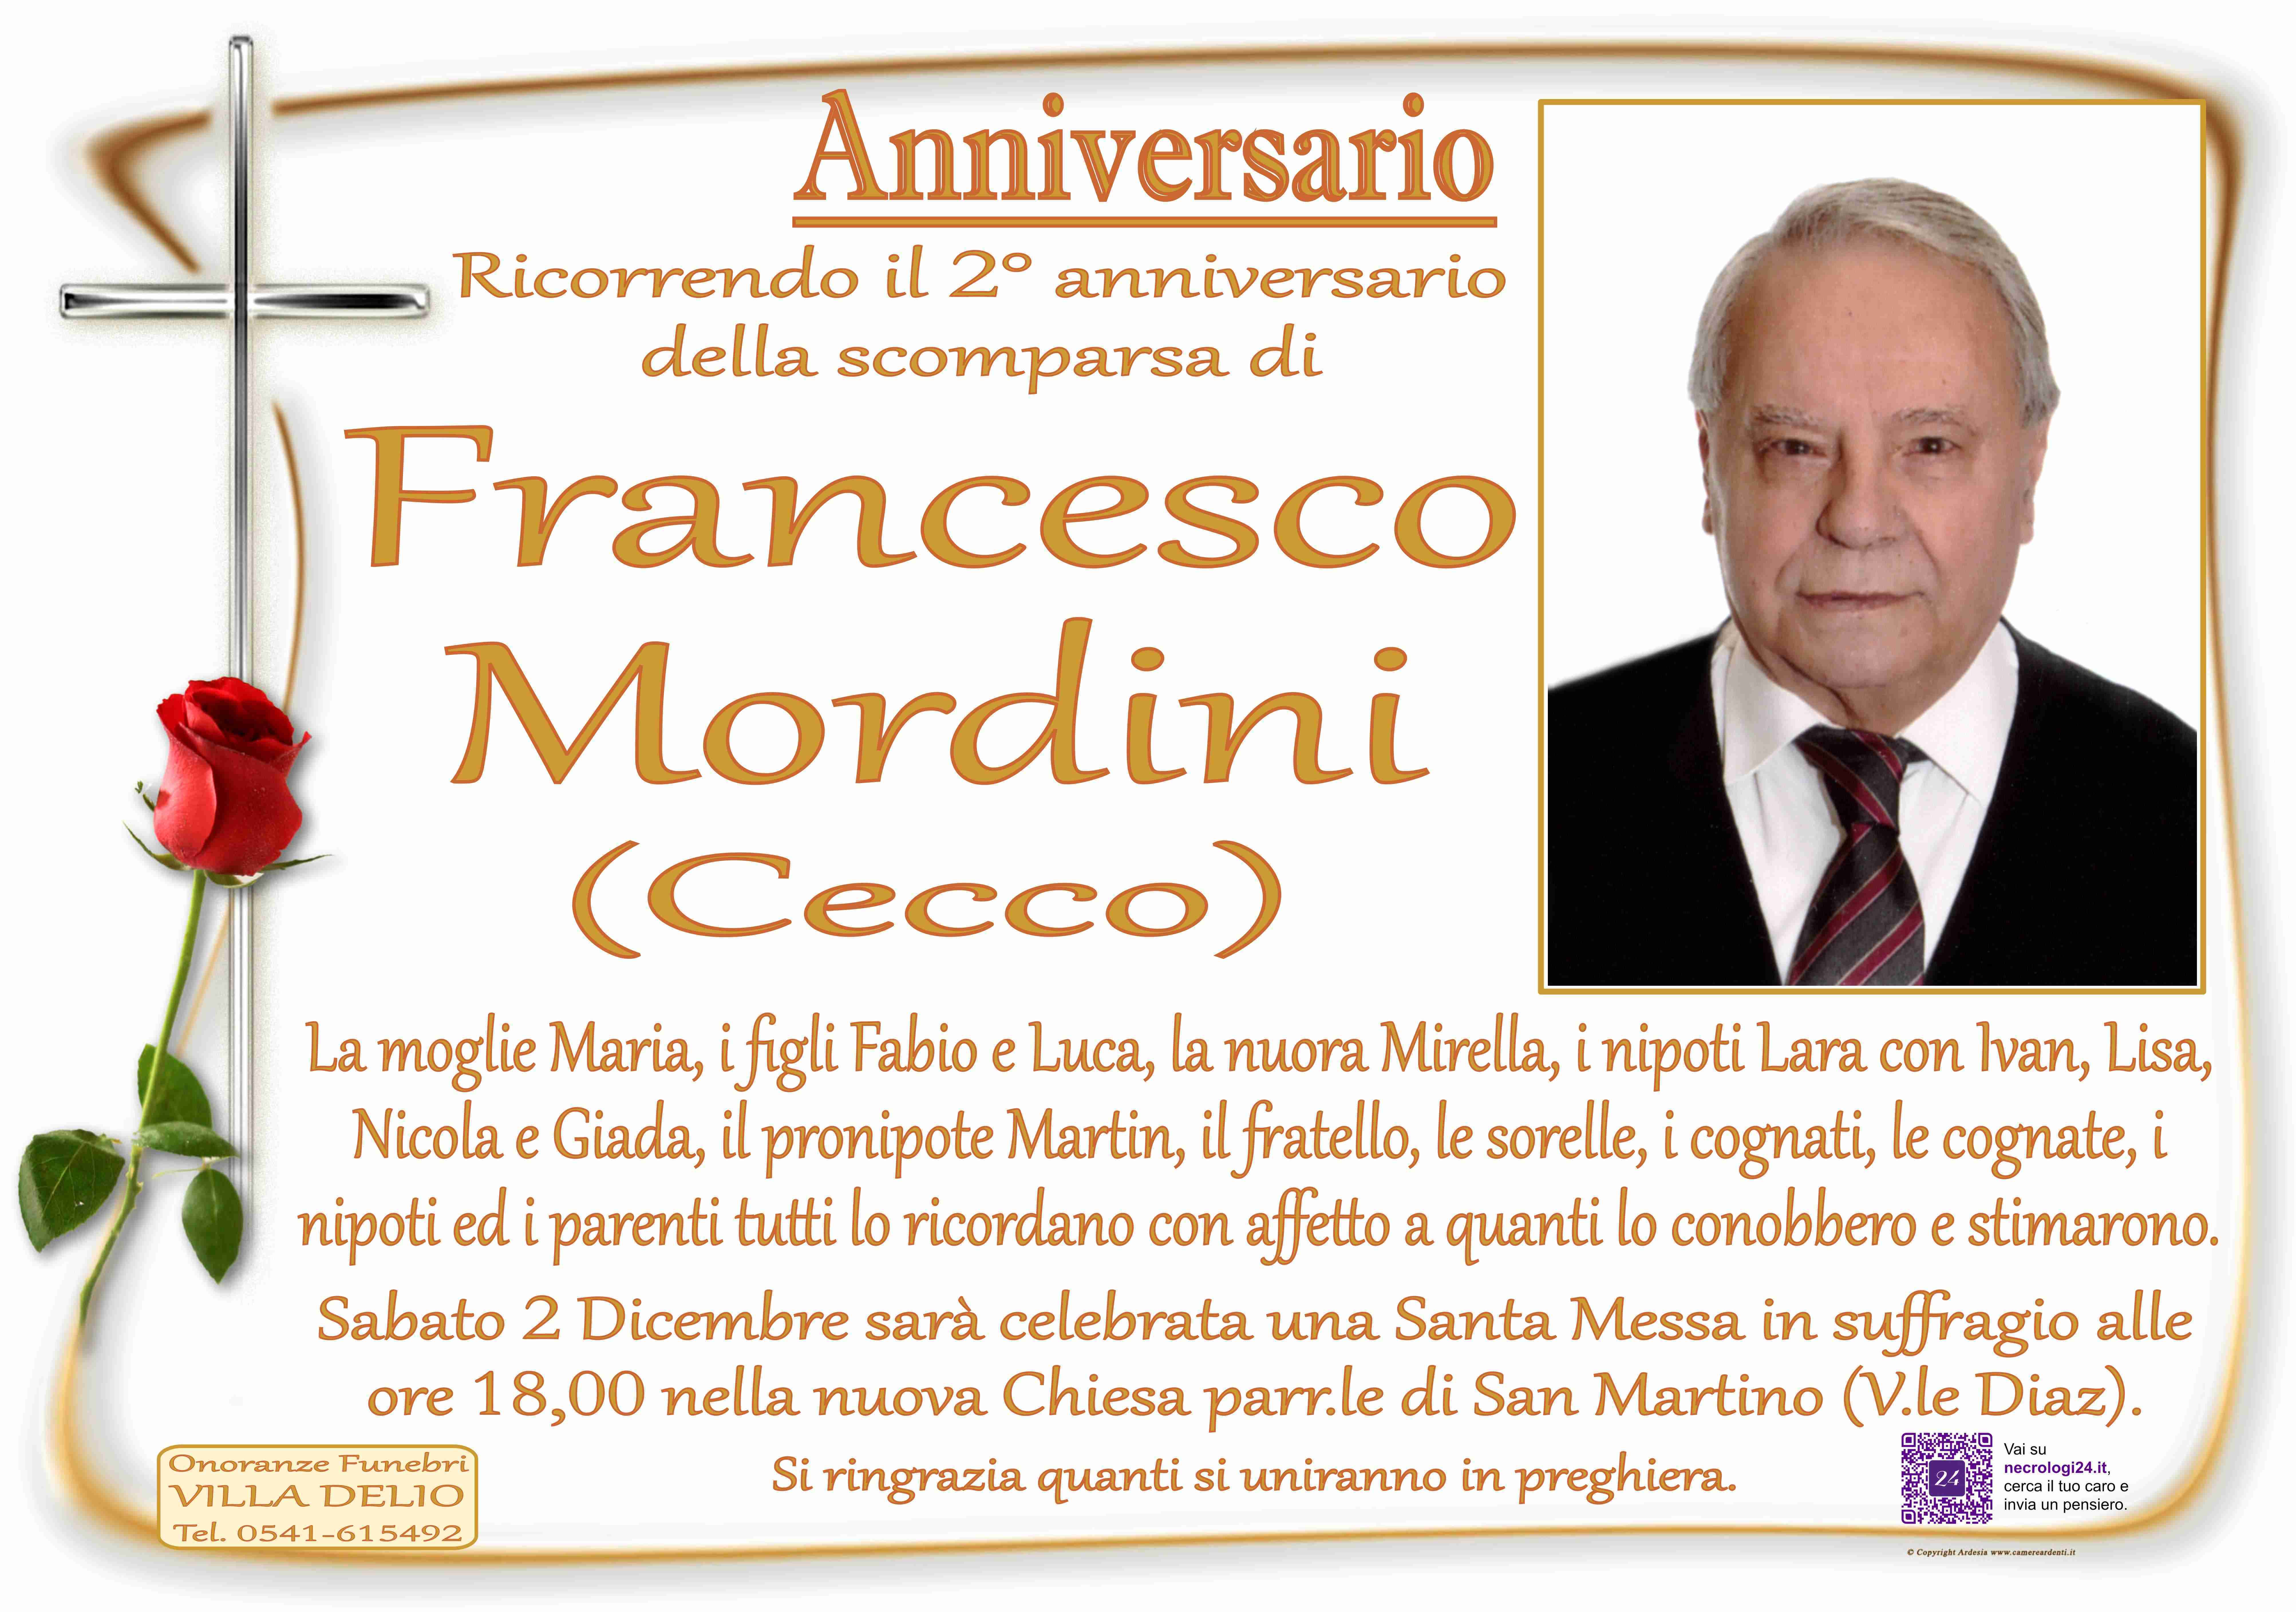 Francesco Mordini